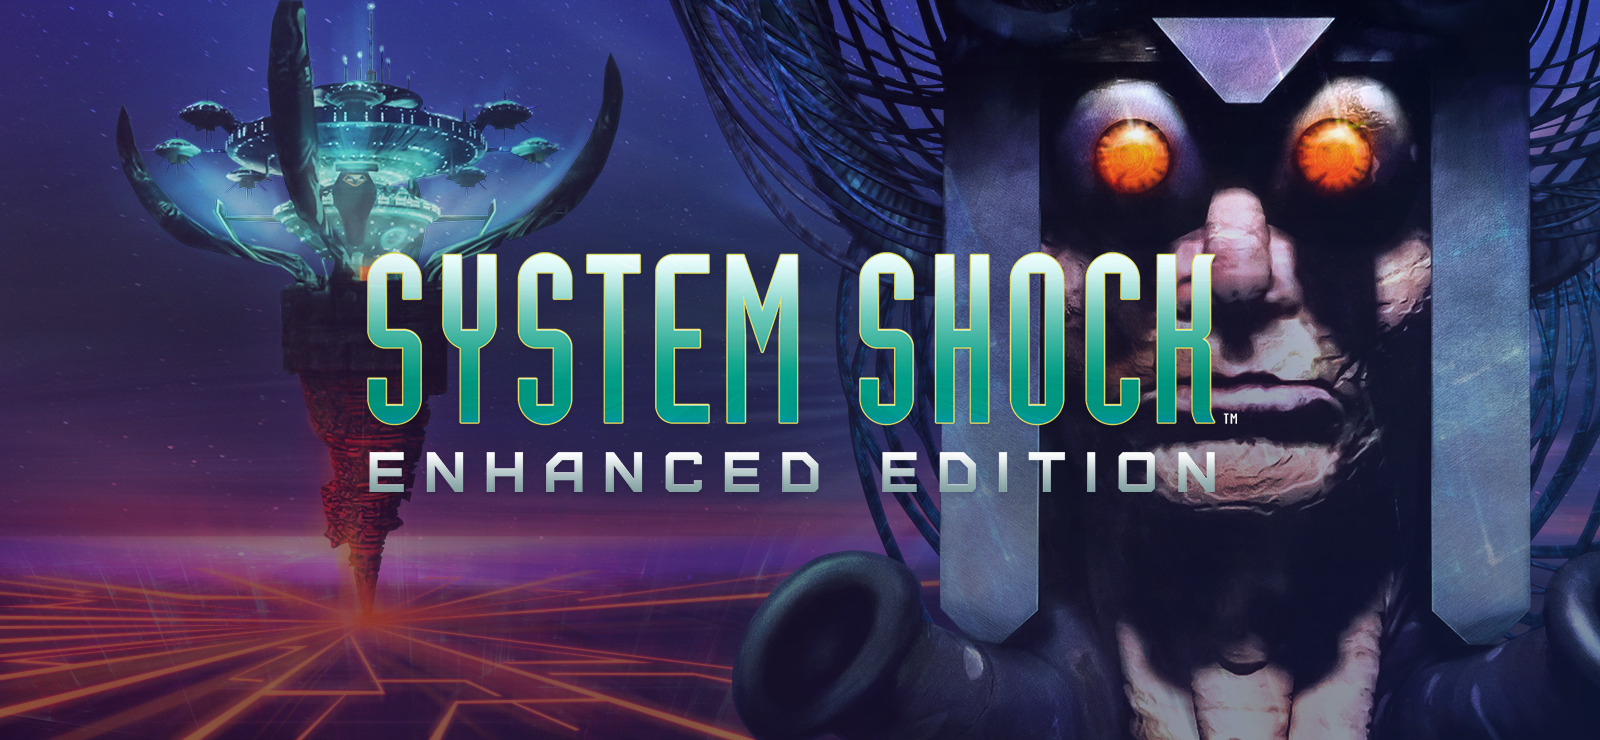 system shock enhanced edition full screen